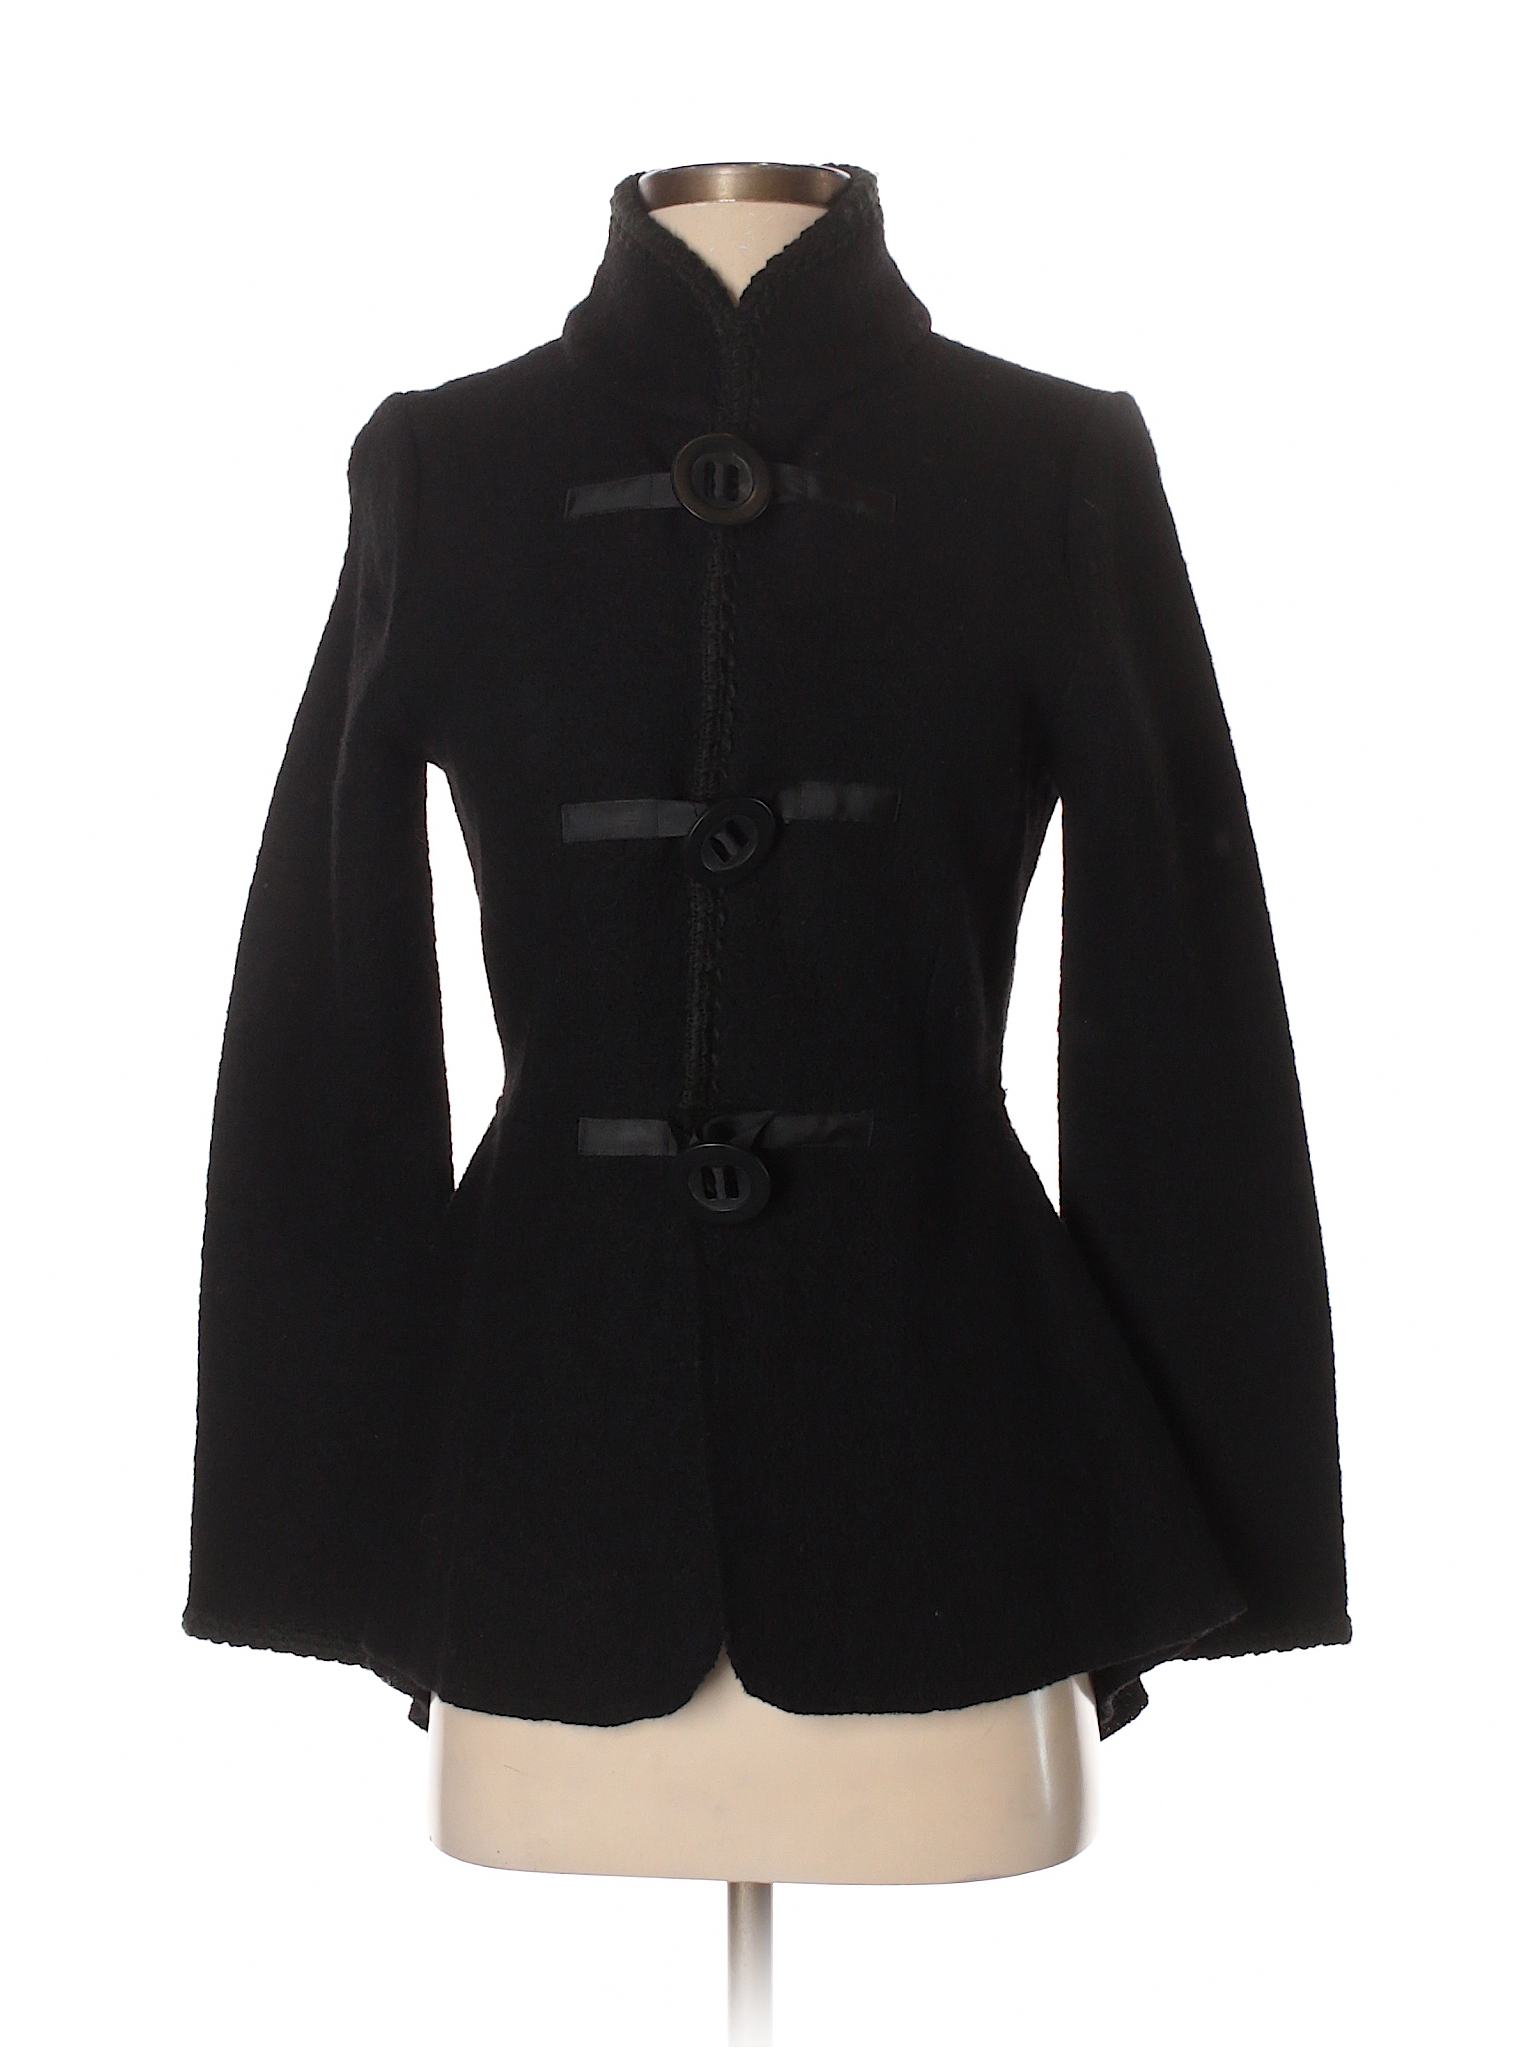 Cynthia Rowley TJX 100% Wool Solid Black Jacket Size S - 68% off | thredUP